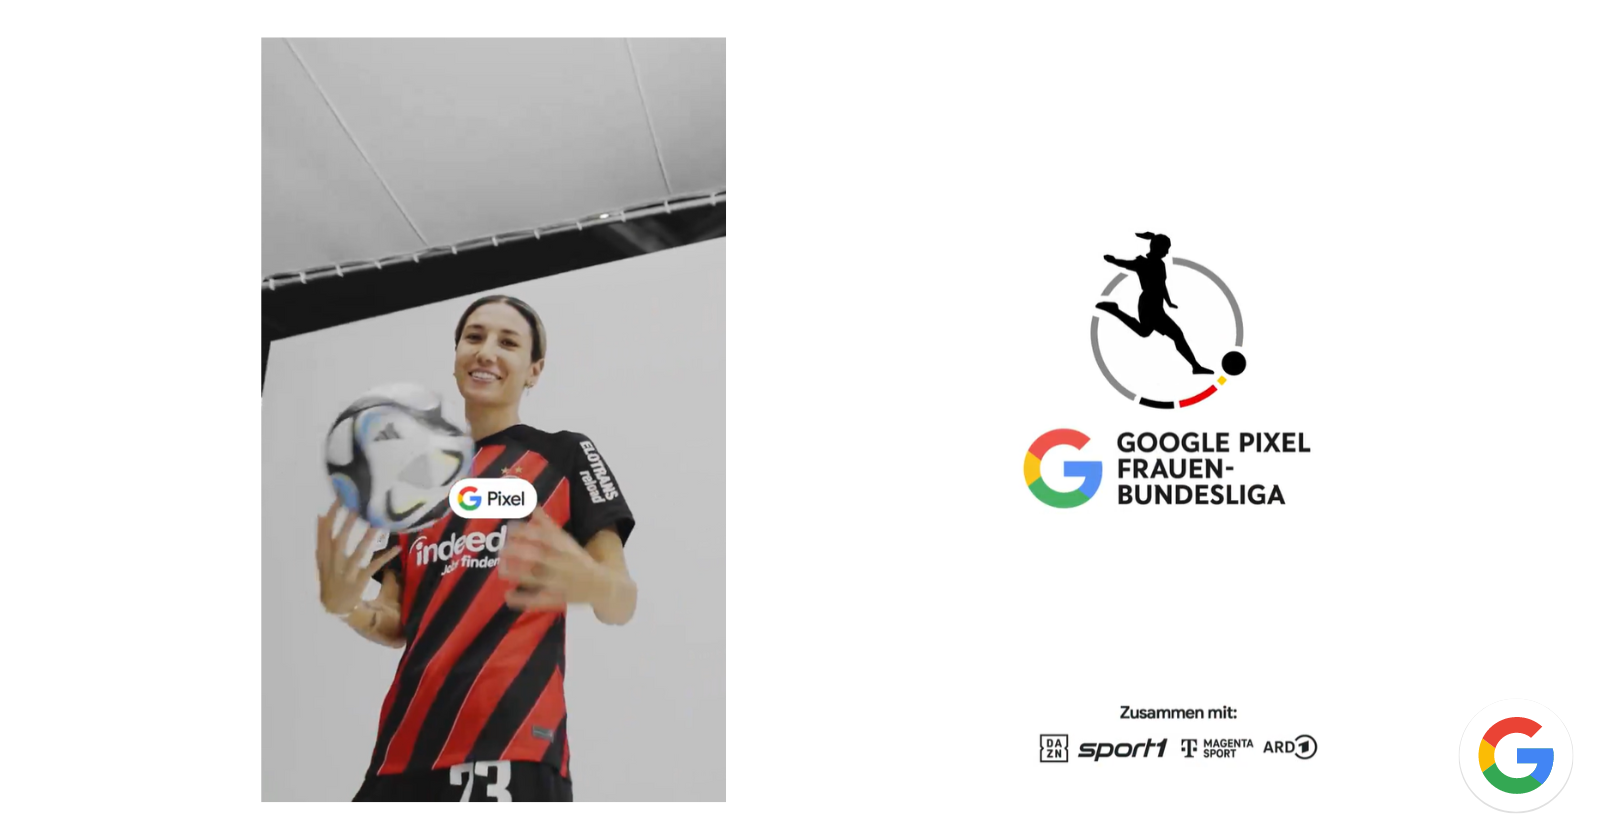 Google Pixel Women's Bundesliga will be free to access on International Women's Day